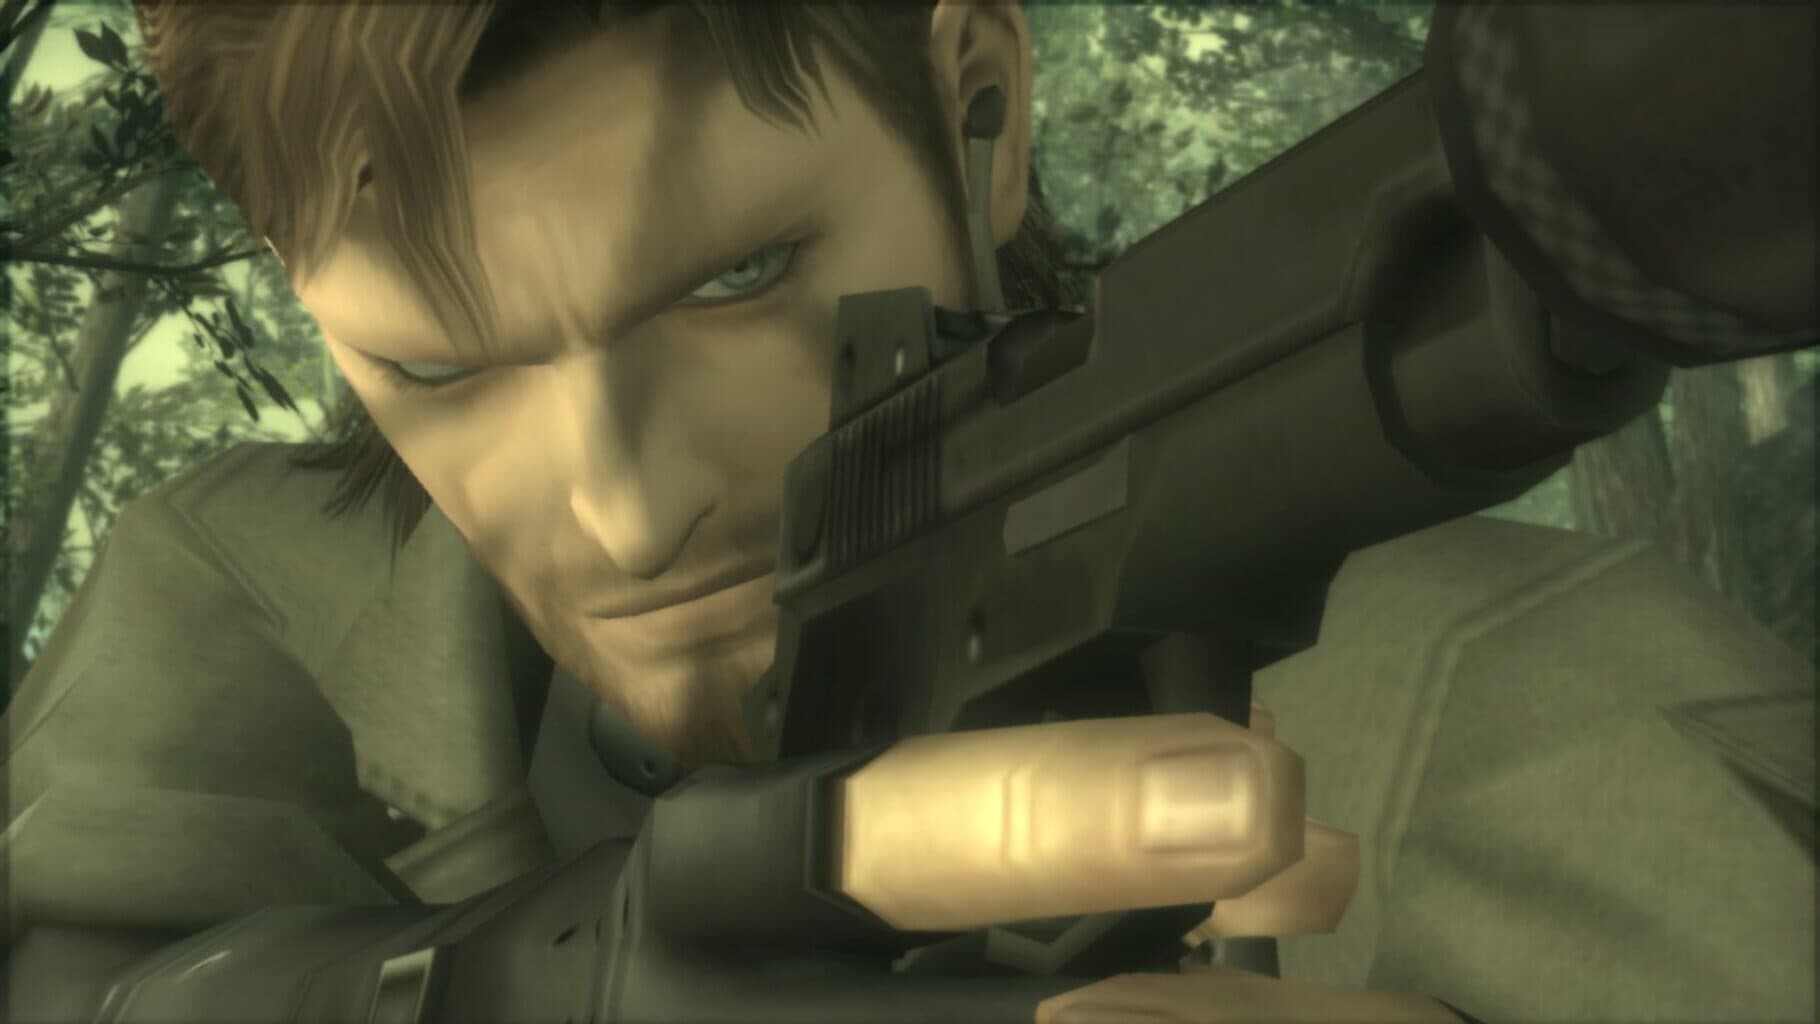 Metal Gear Solid HD Edition: 2 & 3 Image